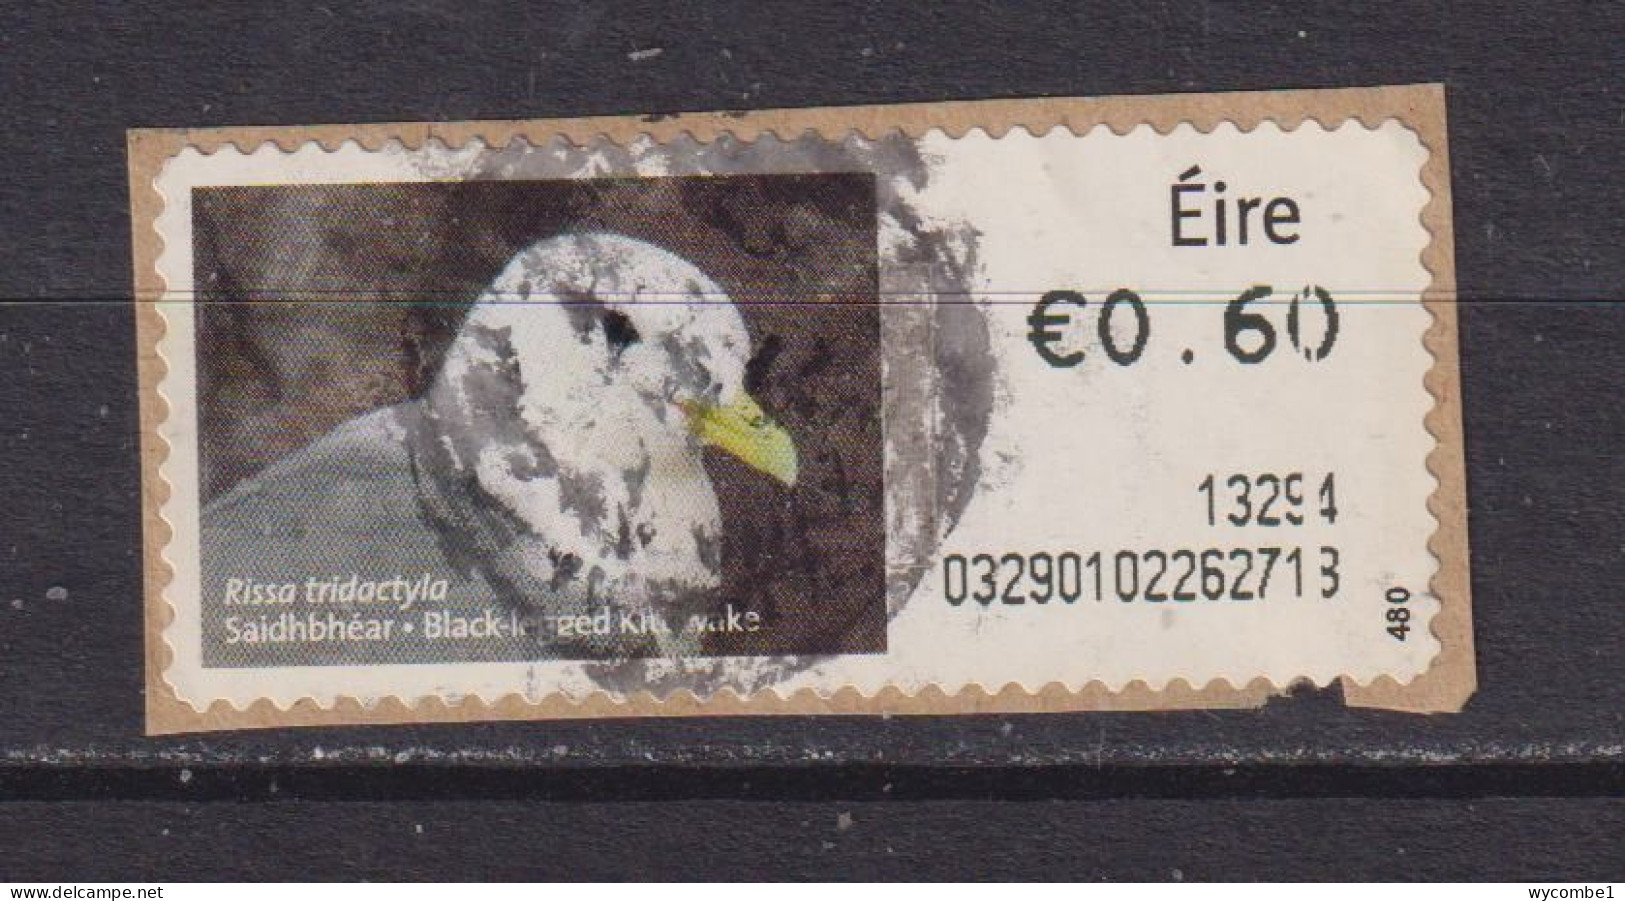 IRELAND - 2013 Black Legged Kittiwake SOAR (Stamp On A Roll) CDS Used On Piece As Scan - Oblitérés